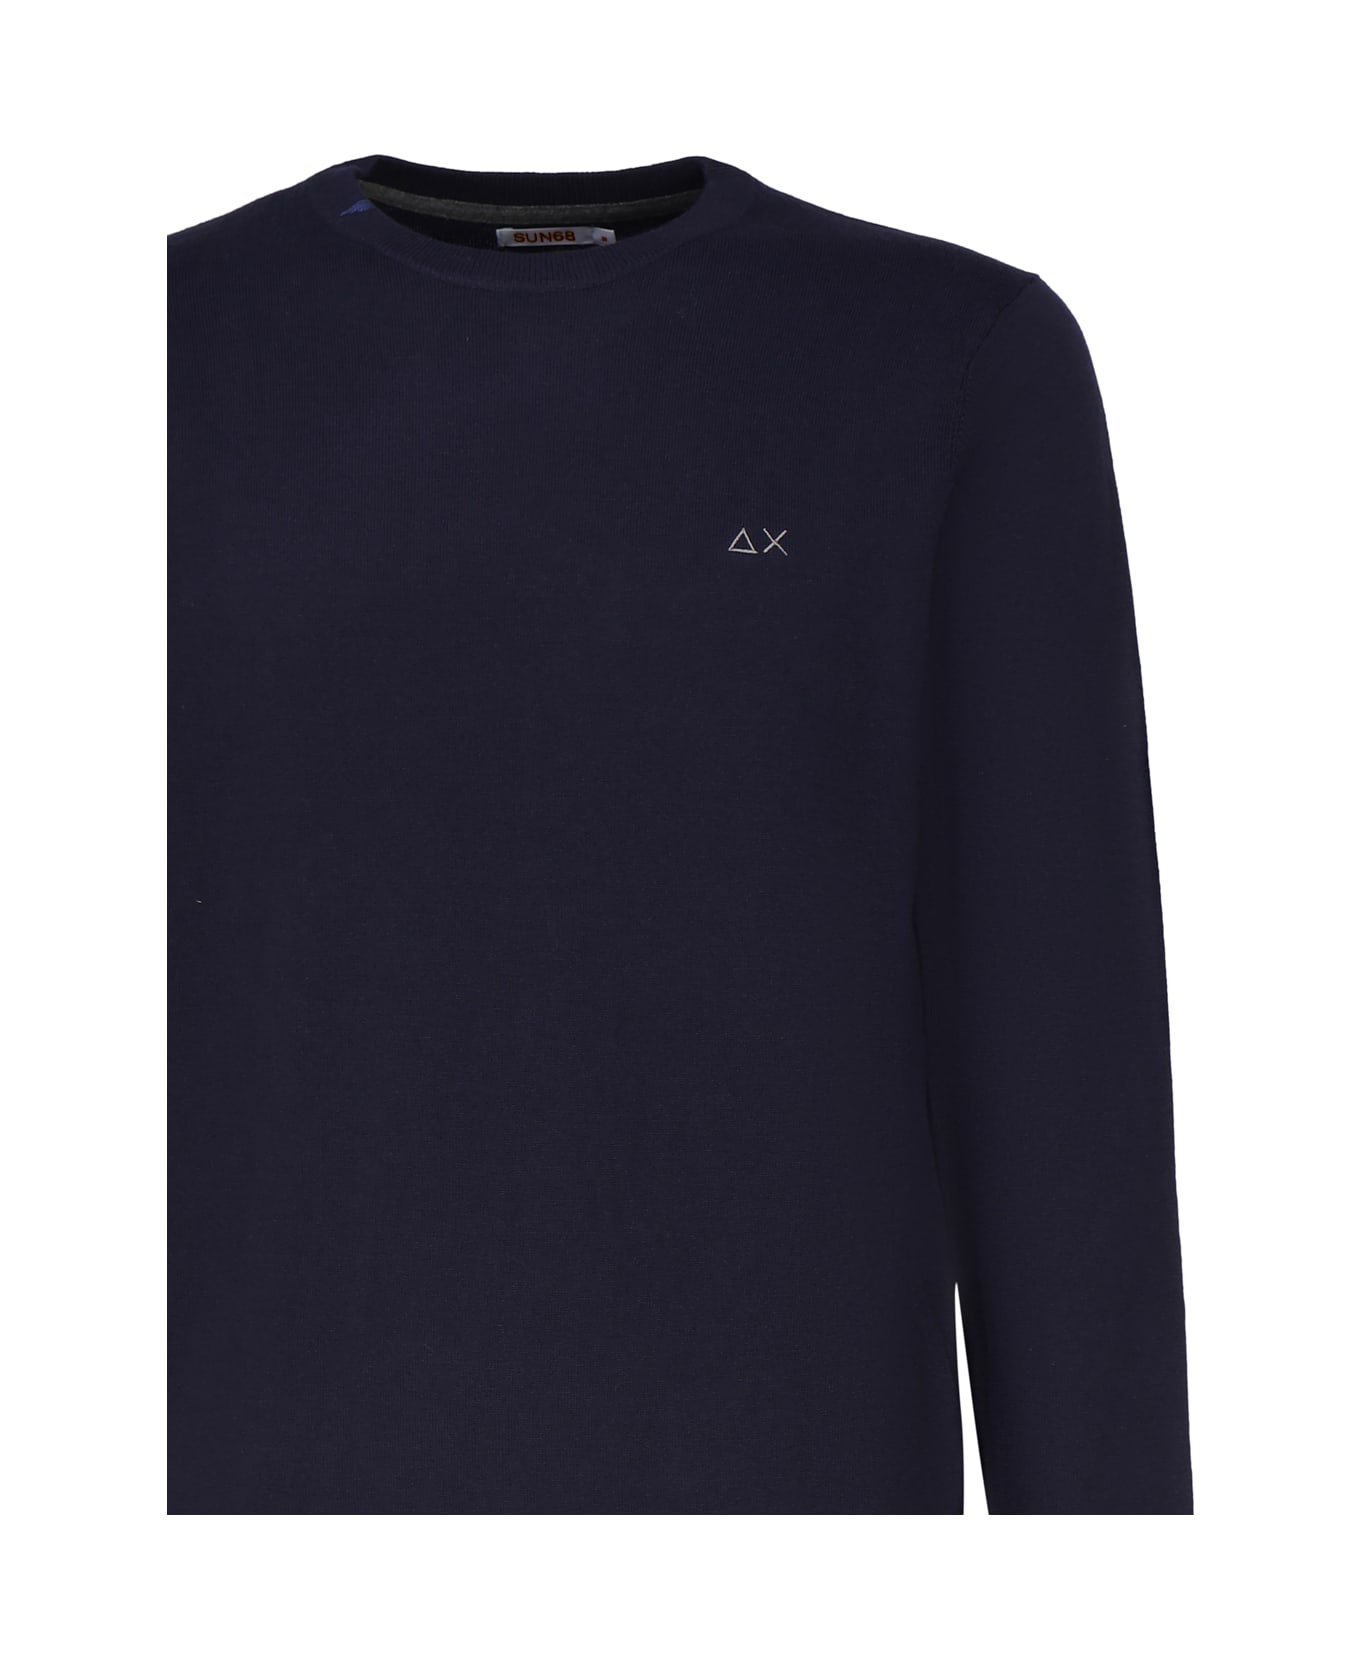 Sun 68 Sweater With Logo Sweater - NAVY BLUE